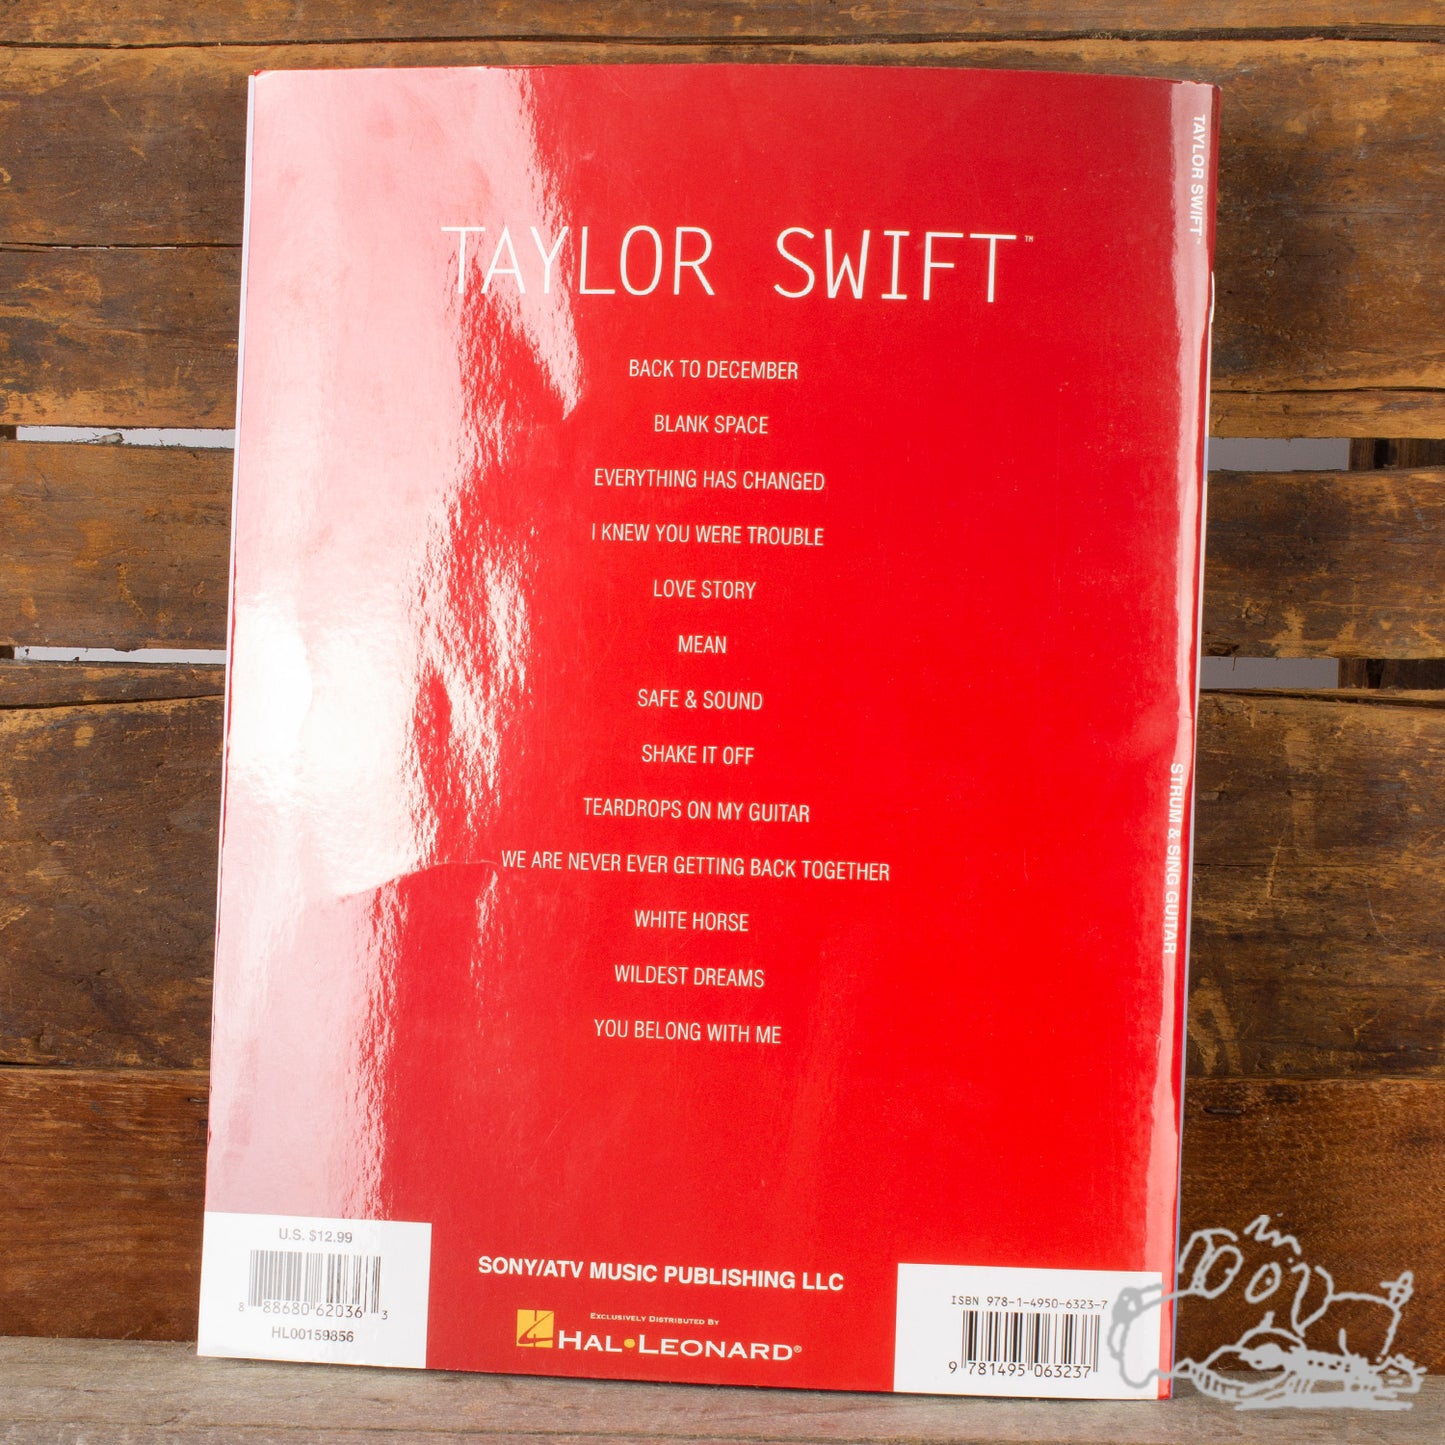 Hal Leonard Taylor Swift - Strum and Sing